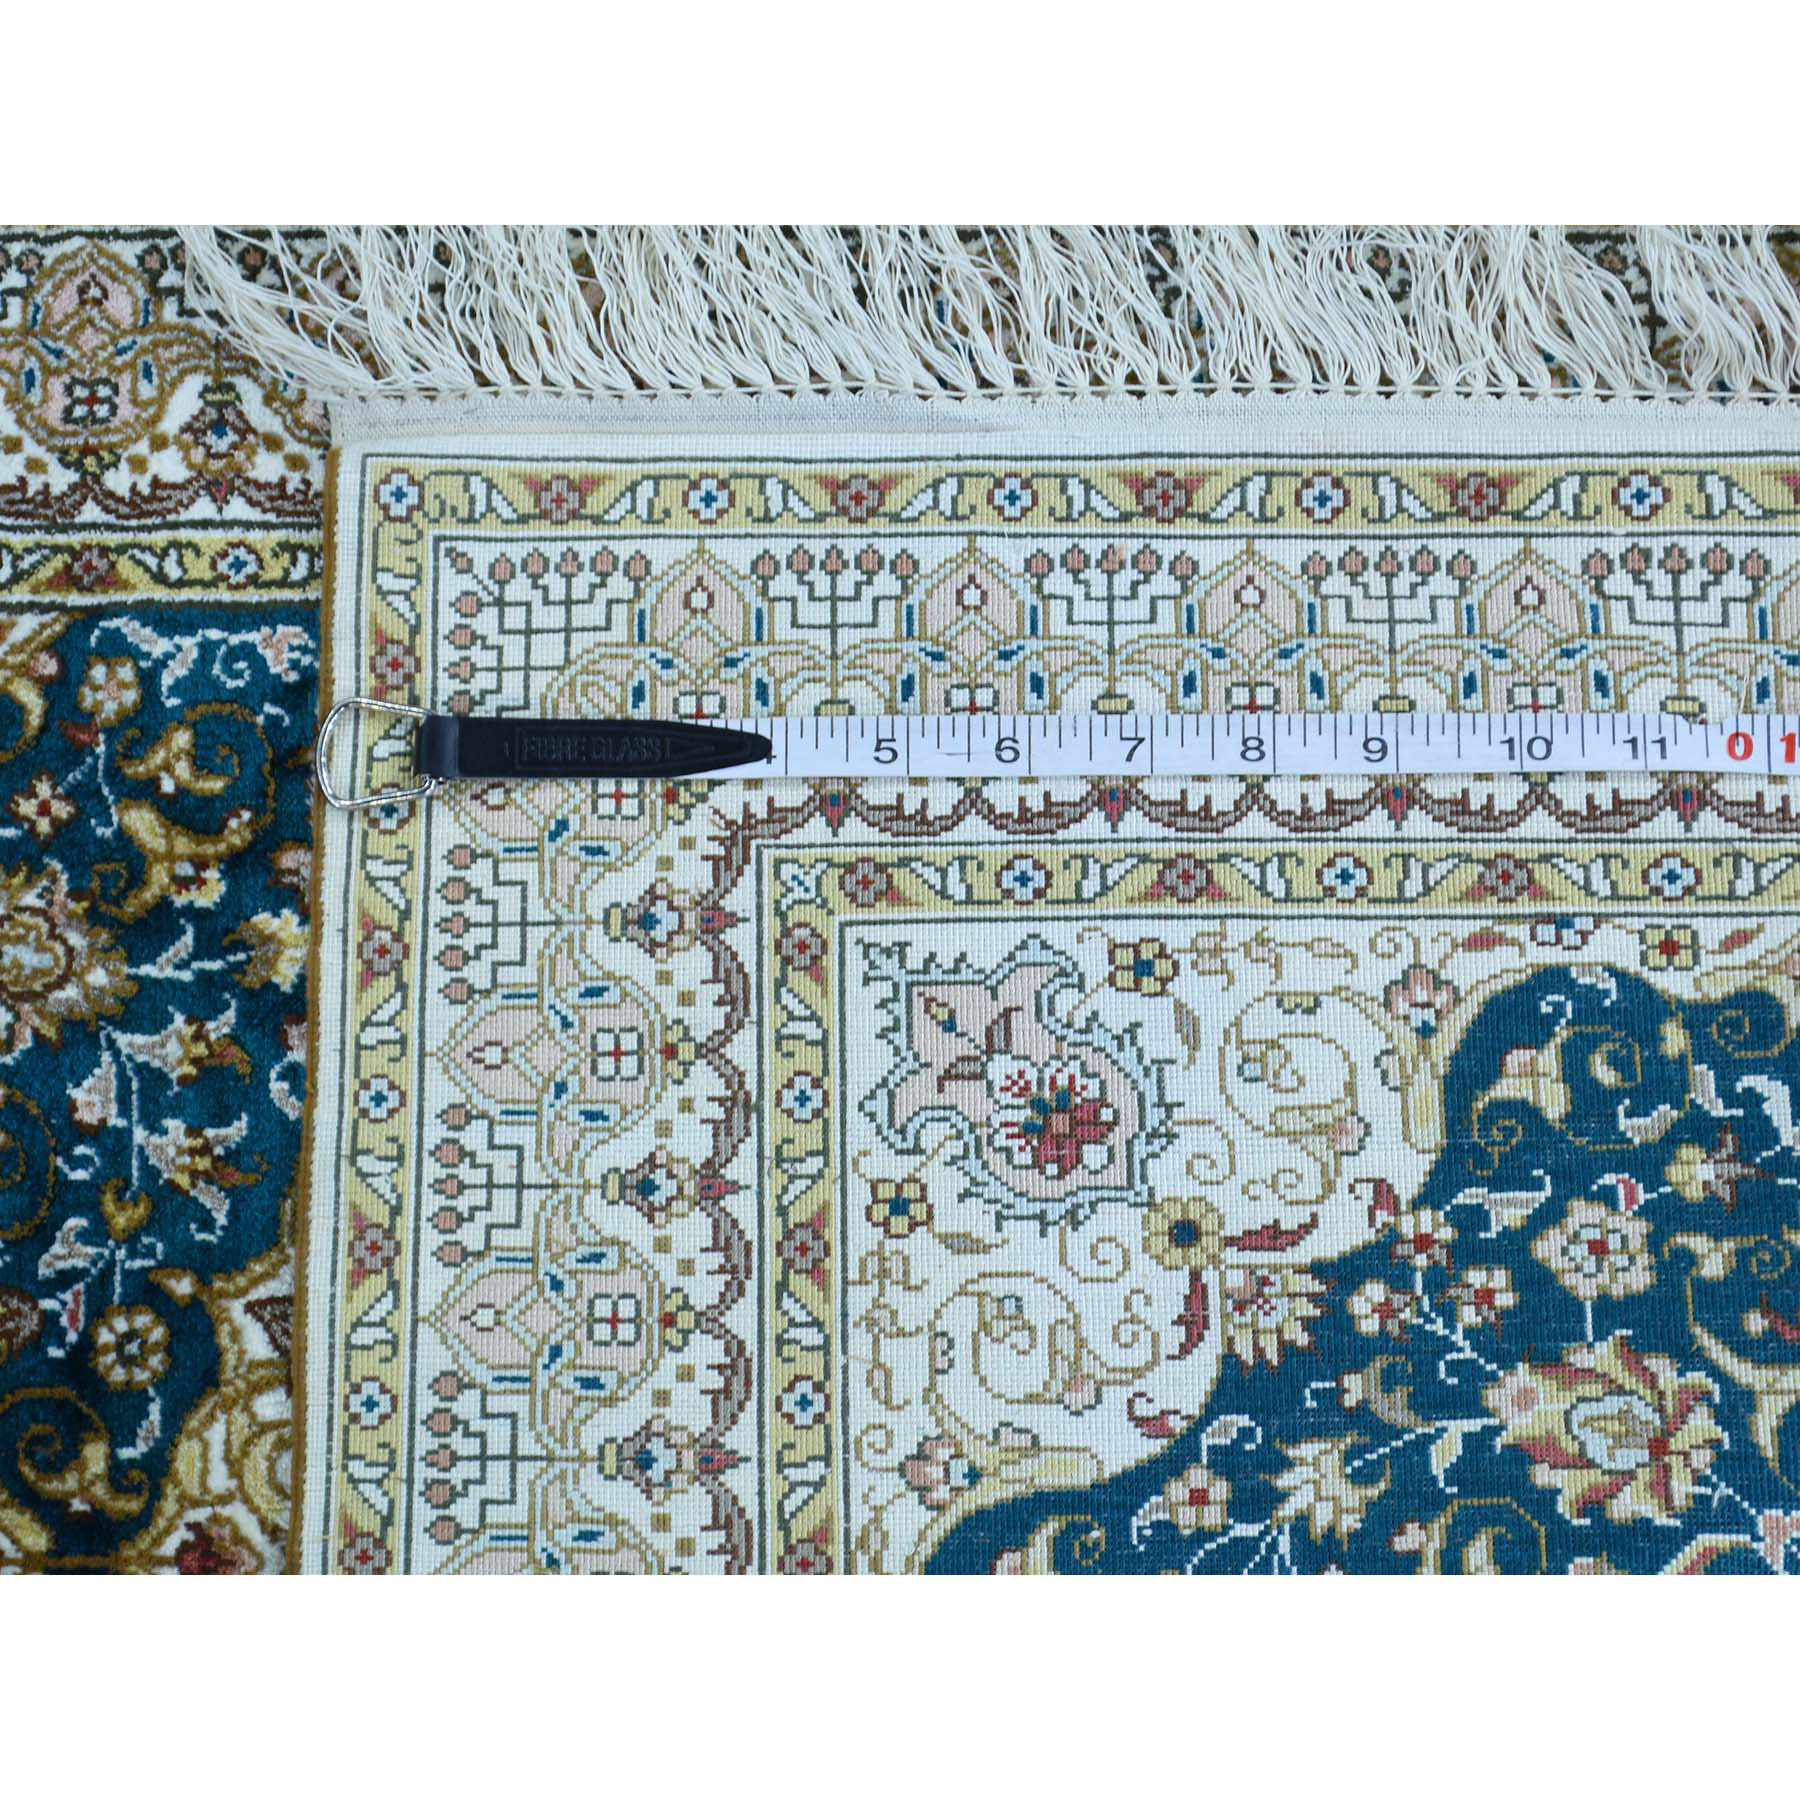 2-1 x3- 600 Kpsi Pure Silk Tabriz Hand-Knotted Oriental Rug 